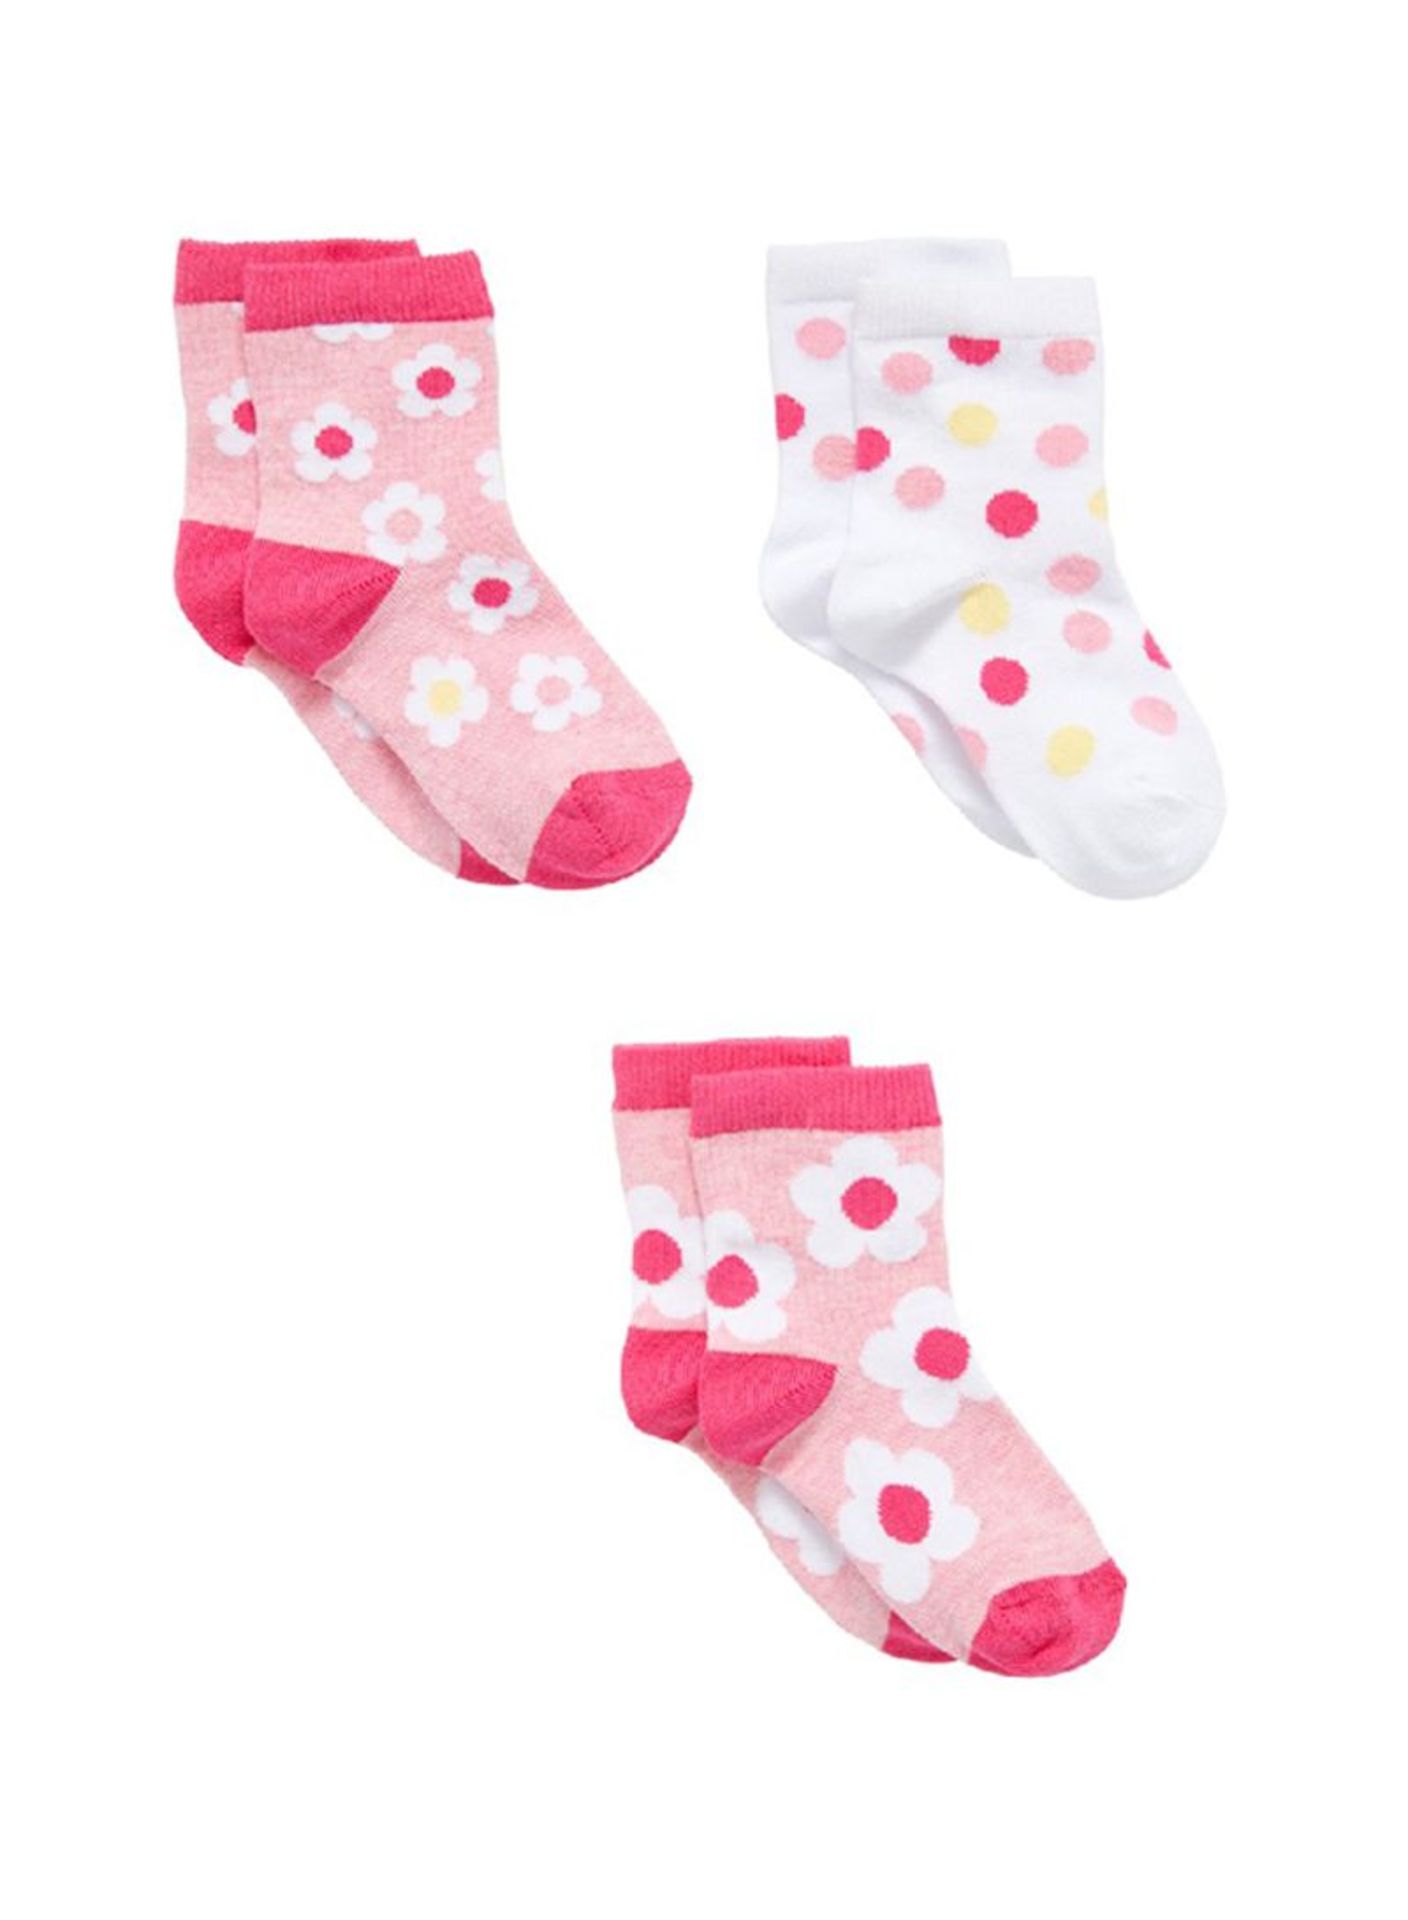 Bulk Mothercare Socks Joblot Rrp £2,010 - No Reserve - Image 10 of 11